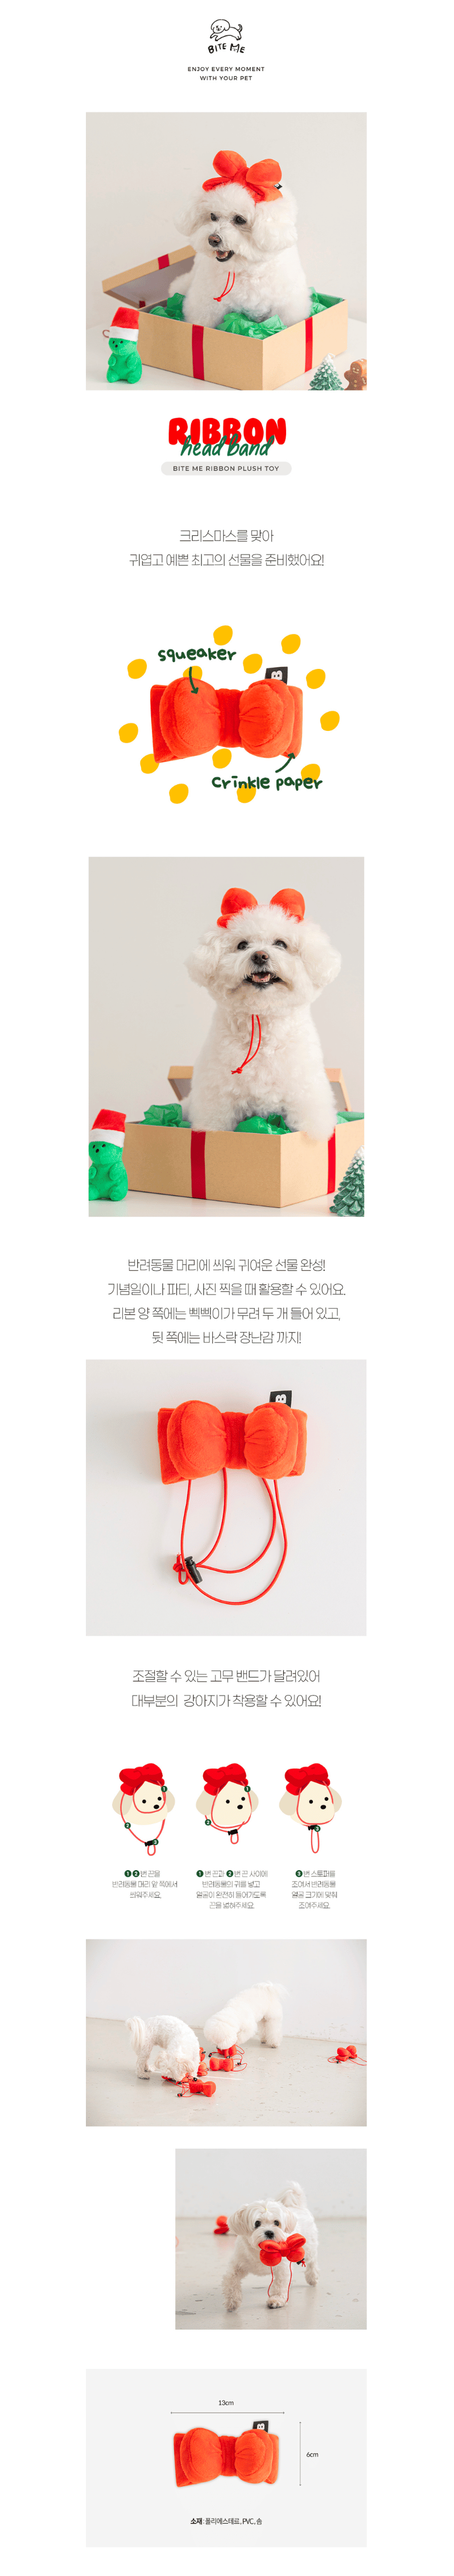 Ribbon Toy Plush | The Daebak Company